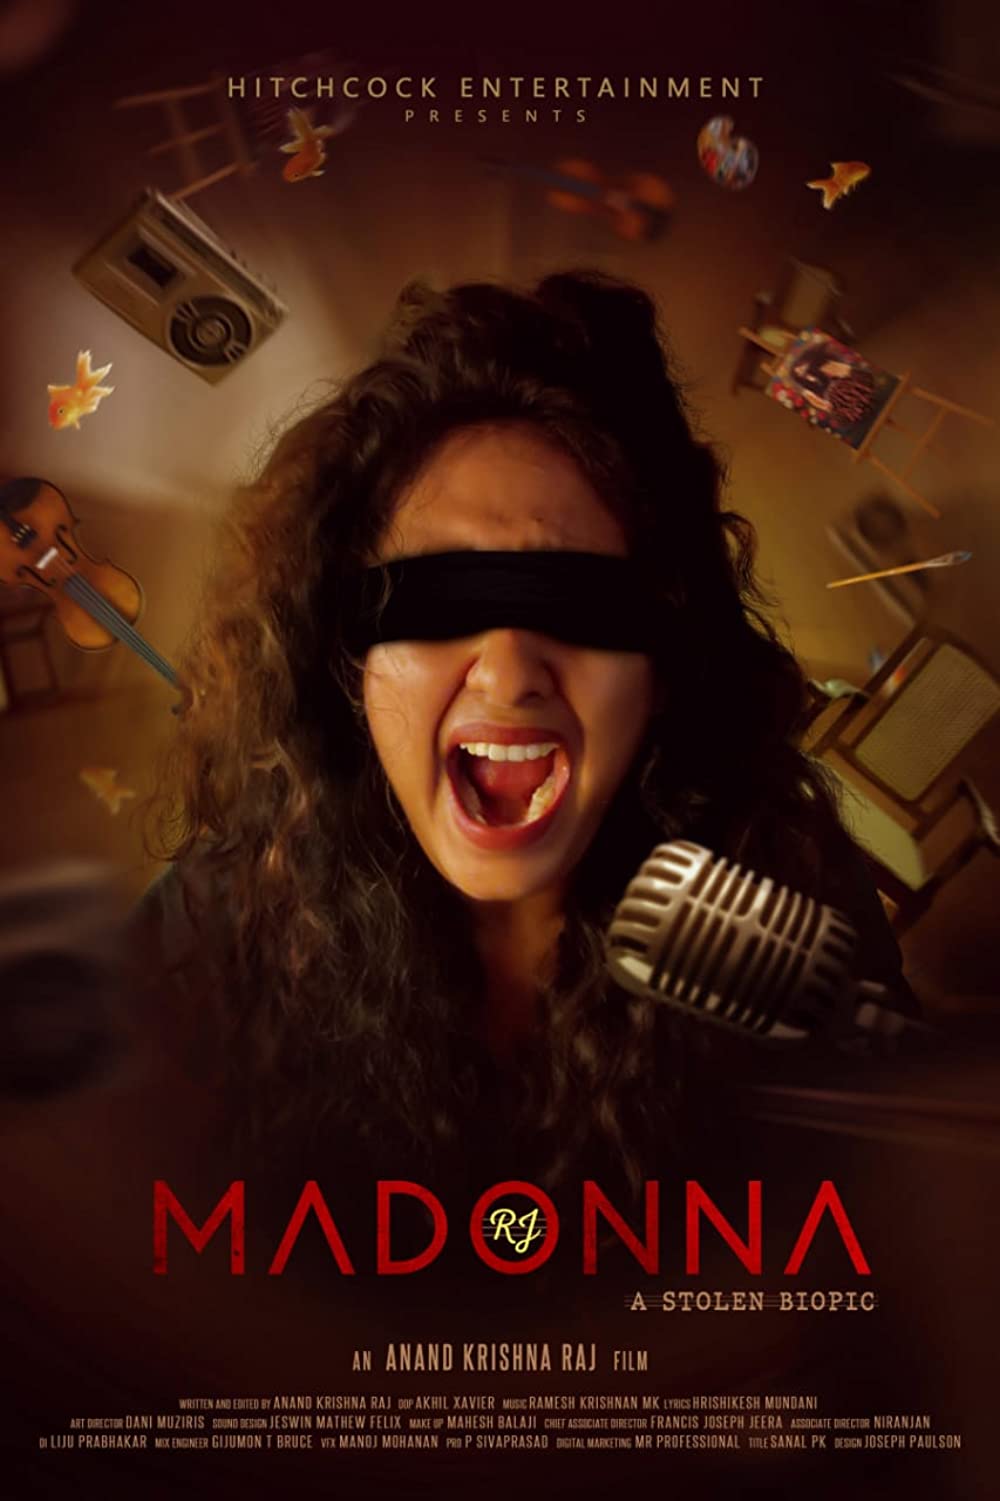 RJ Madonna 2021 Hindi Dubbed (Unofficial) 480p HDRip 300MB Download